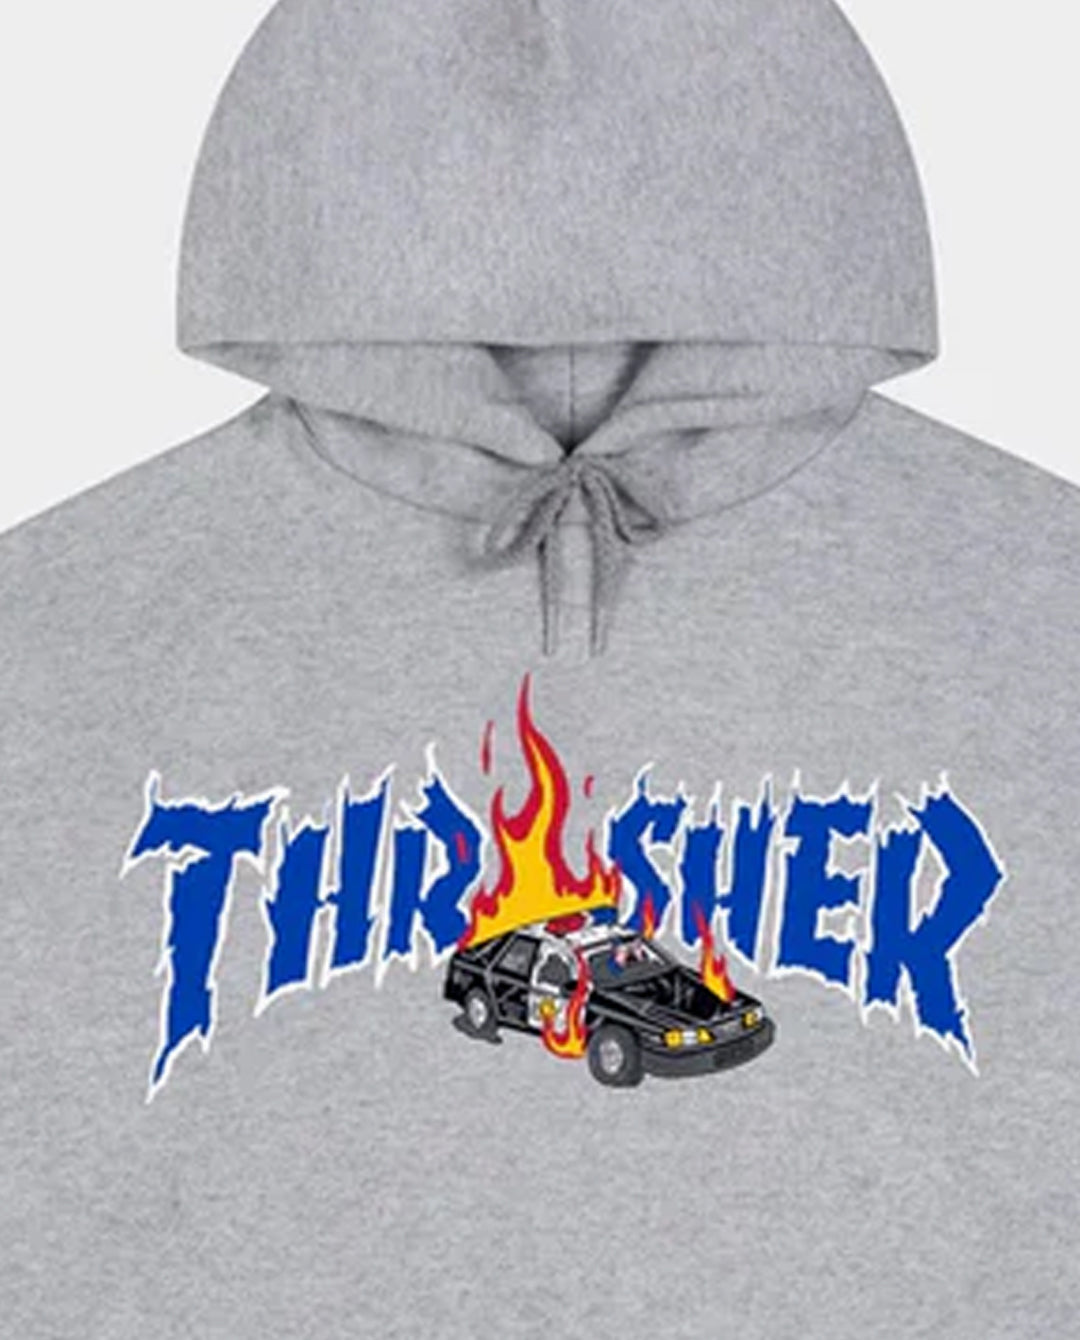 Thrasher - Neckface Cop Car Hood - Grey